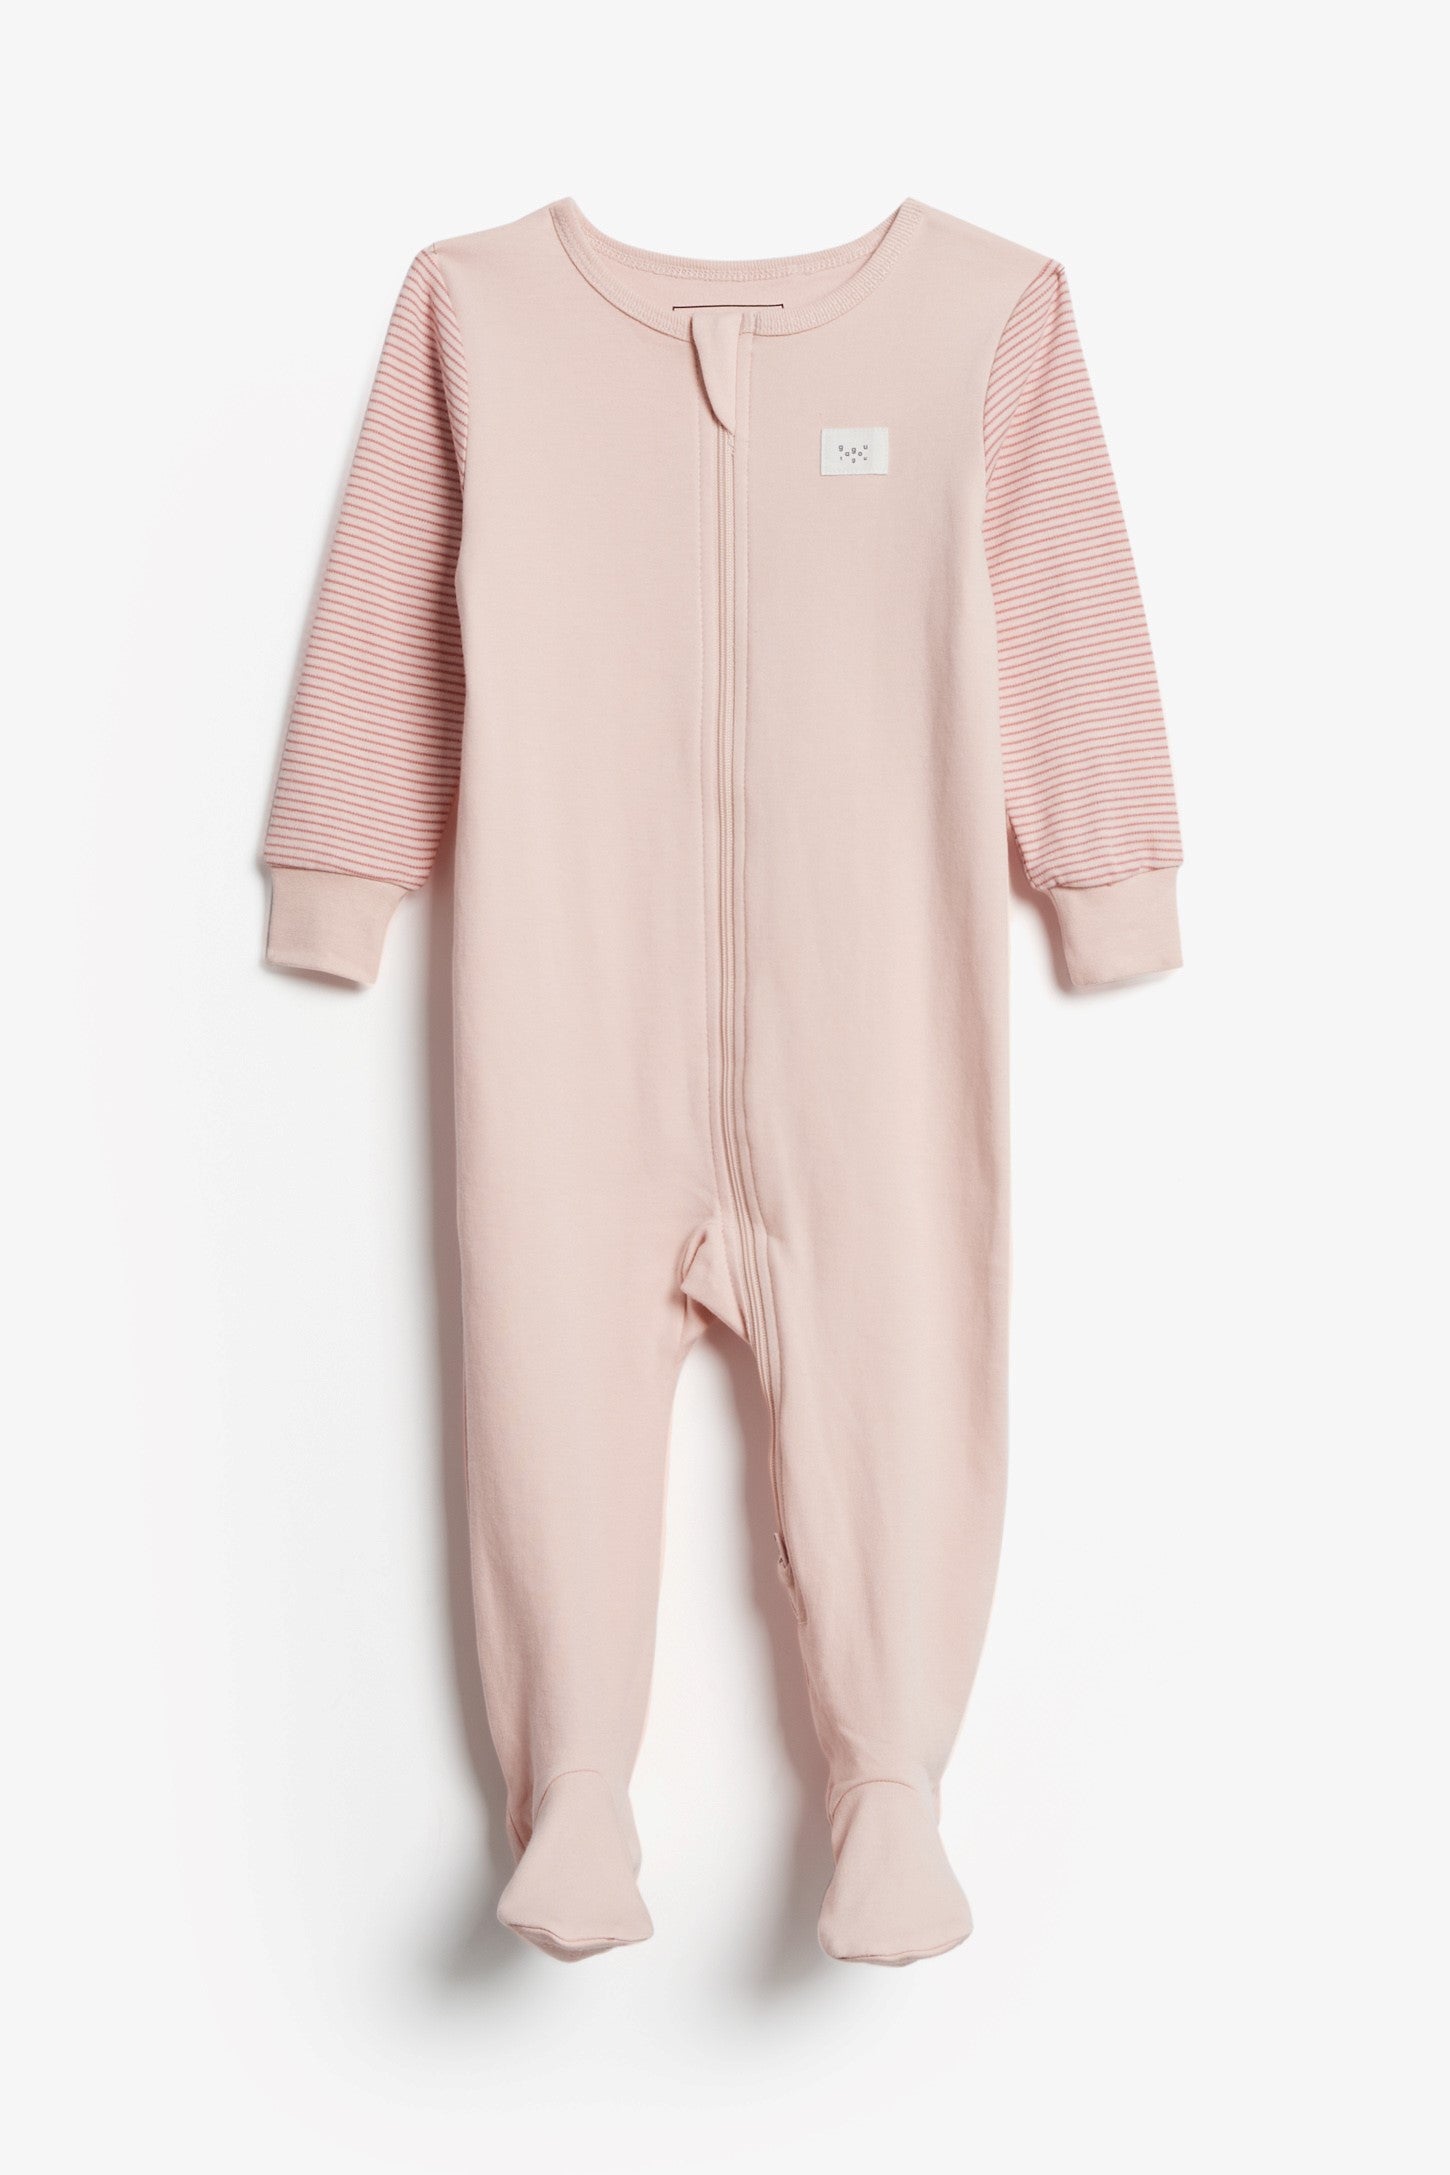 Pyjama 1-pièce imprimé, coton bio - Bébé && ROSE